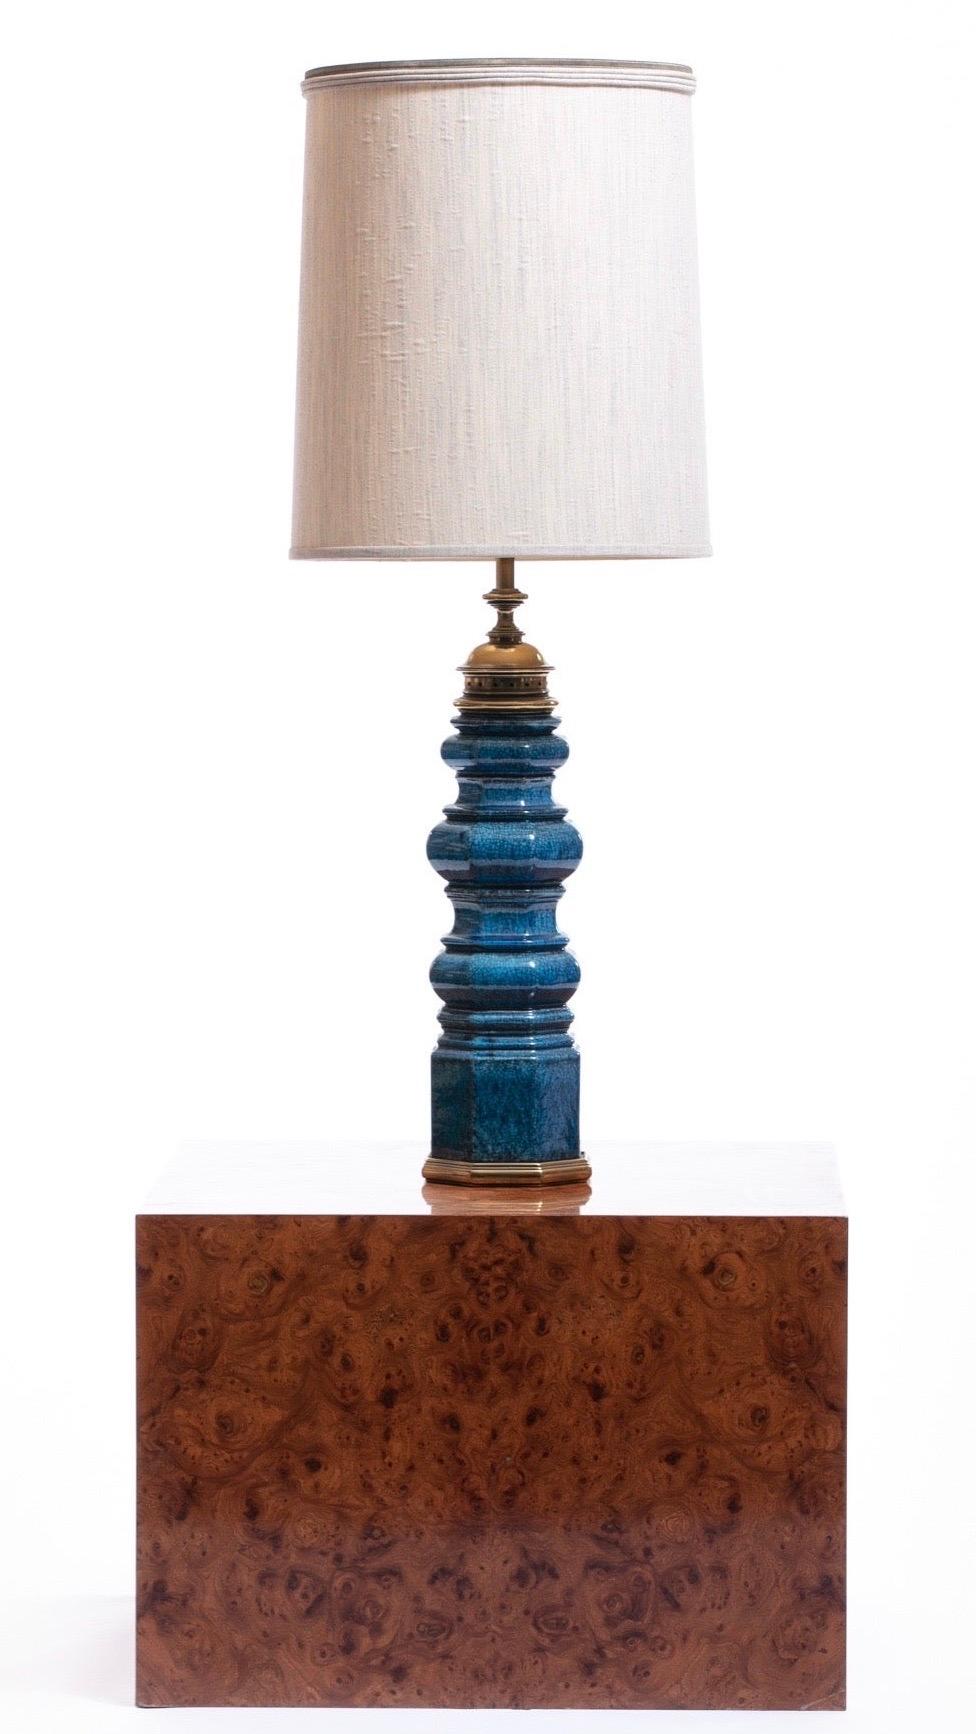 20th Century Stiffel Blue Ceramic Table Lamp with Crackle Glaze, circa 1960